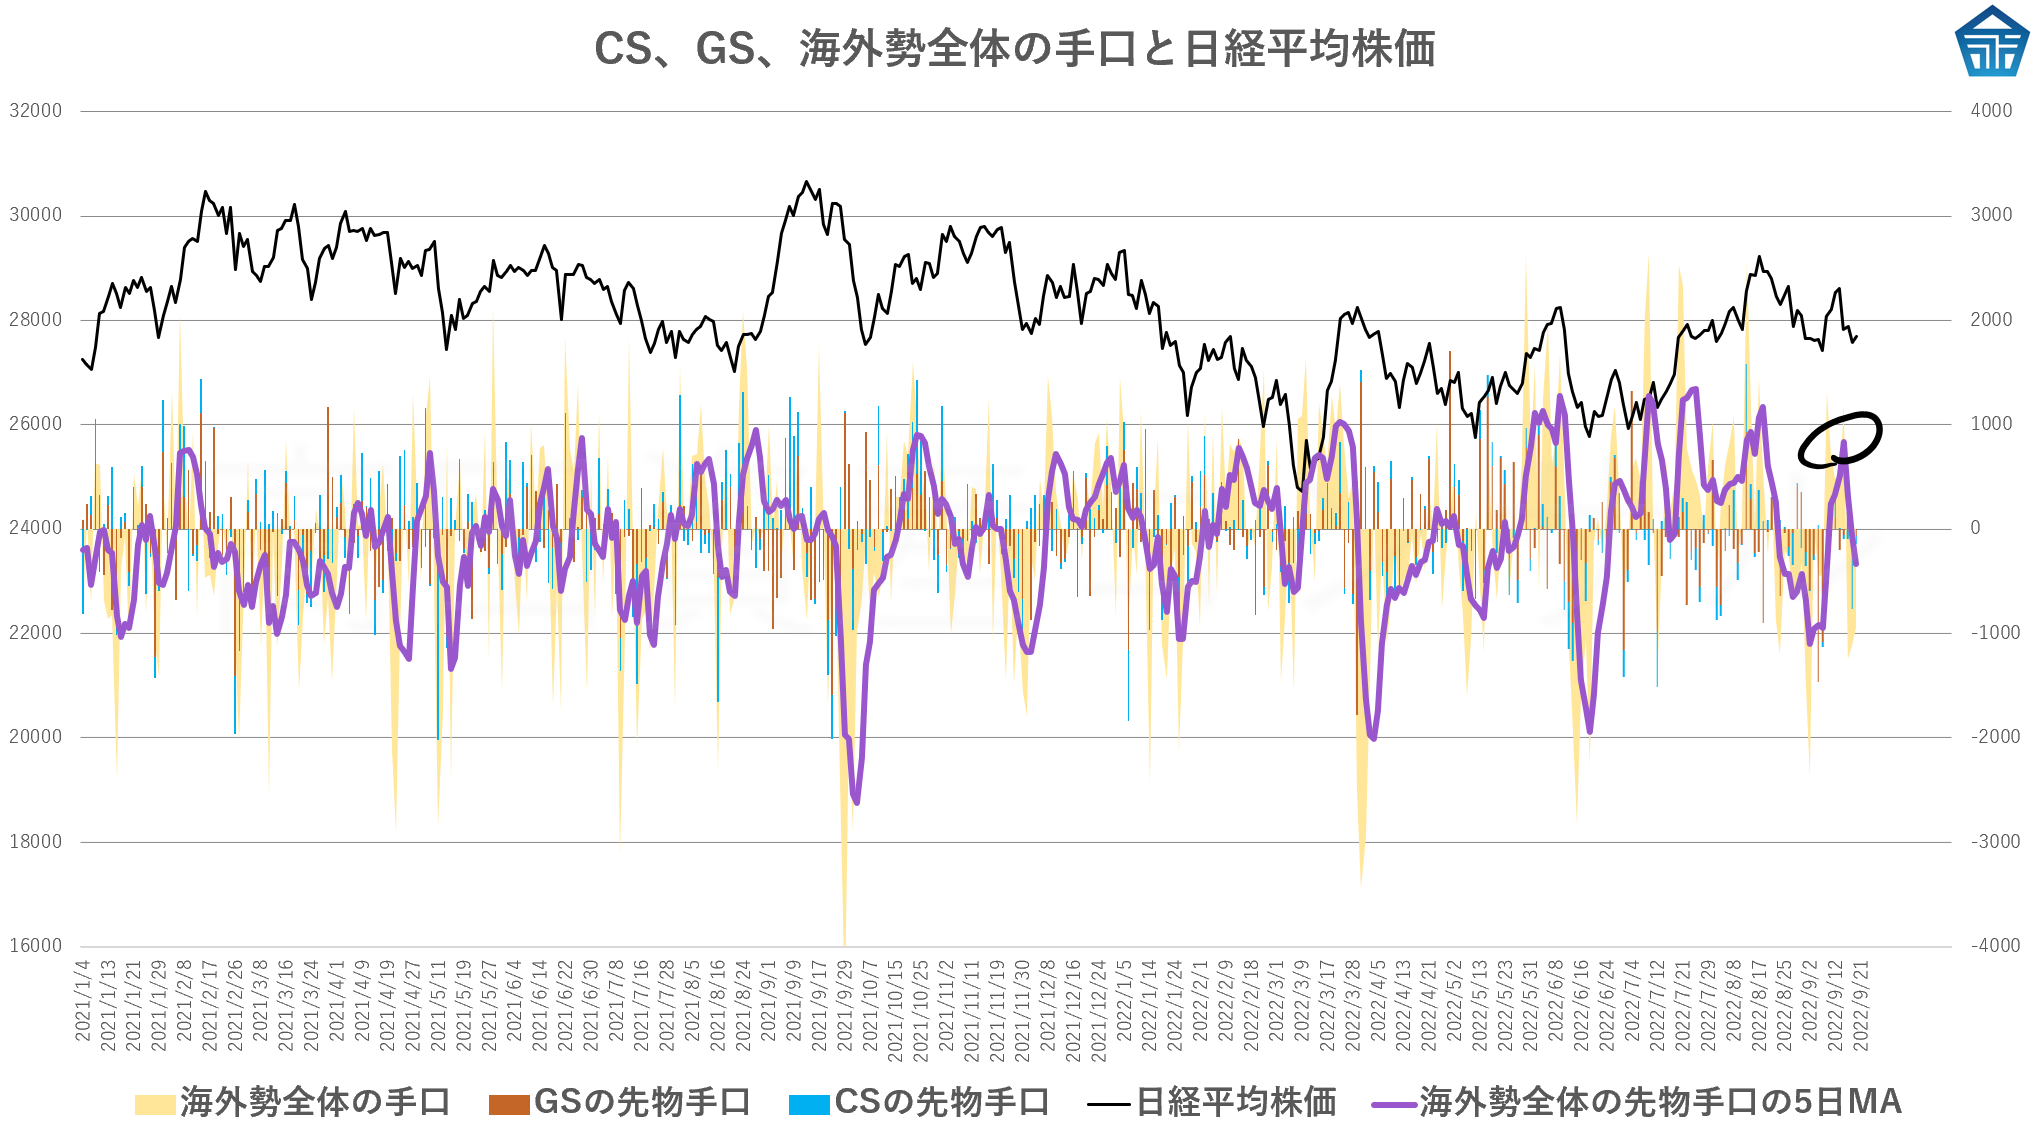 CS、GS、海外勢全体の手口と日経平均株価202209203iusehj3